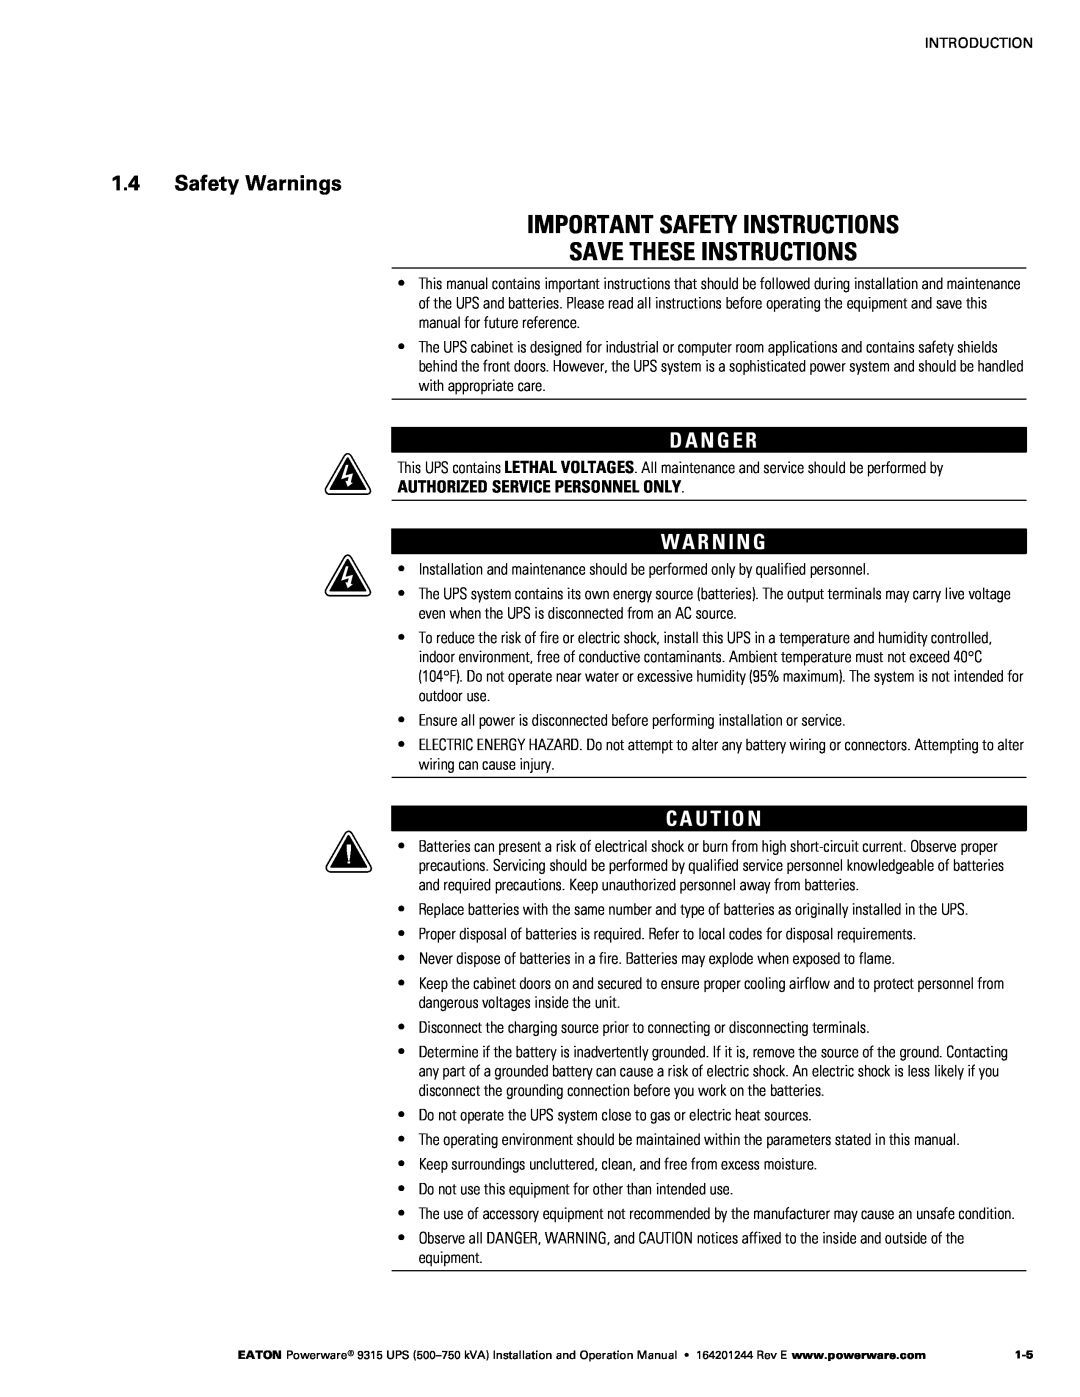 Powerware Powerware 9315 operation manual Safety Warnings 